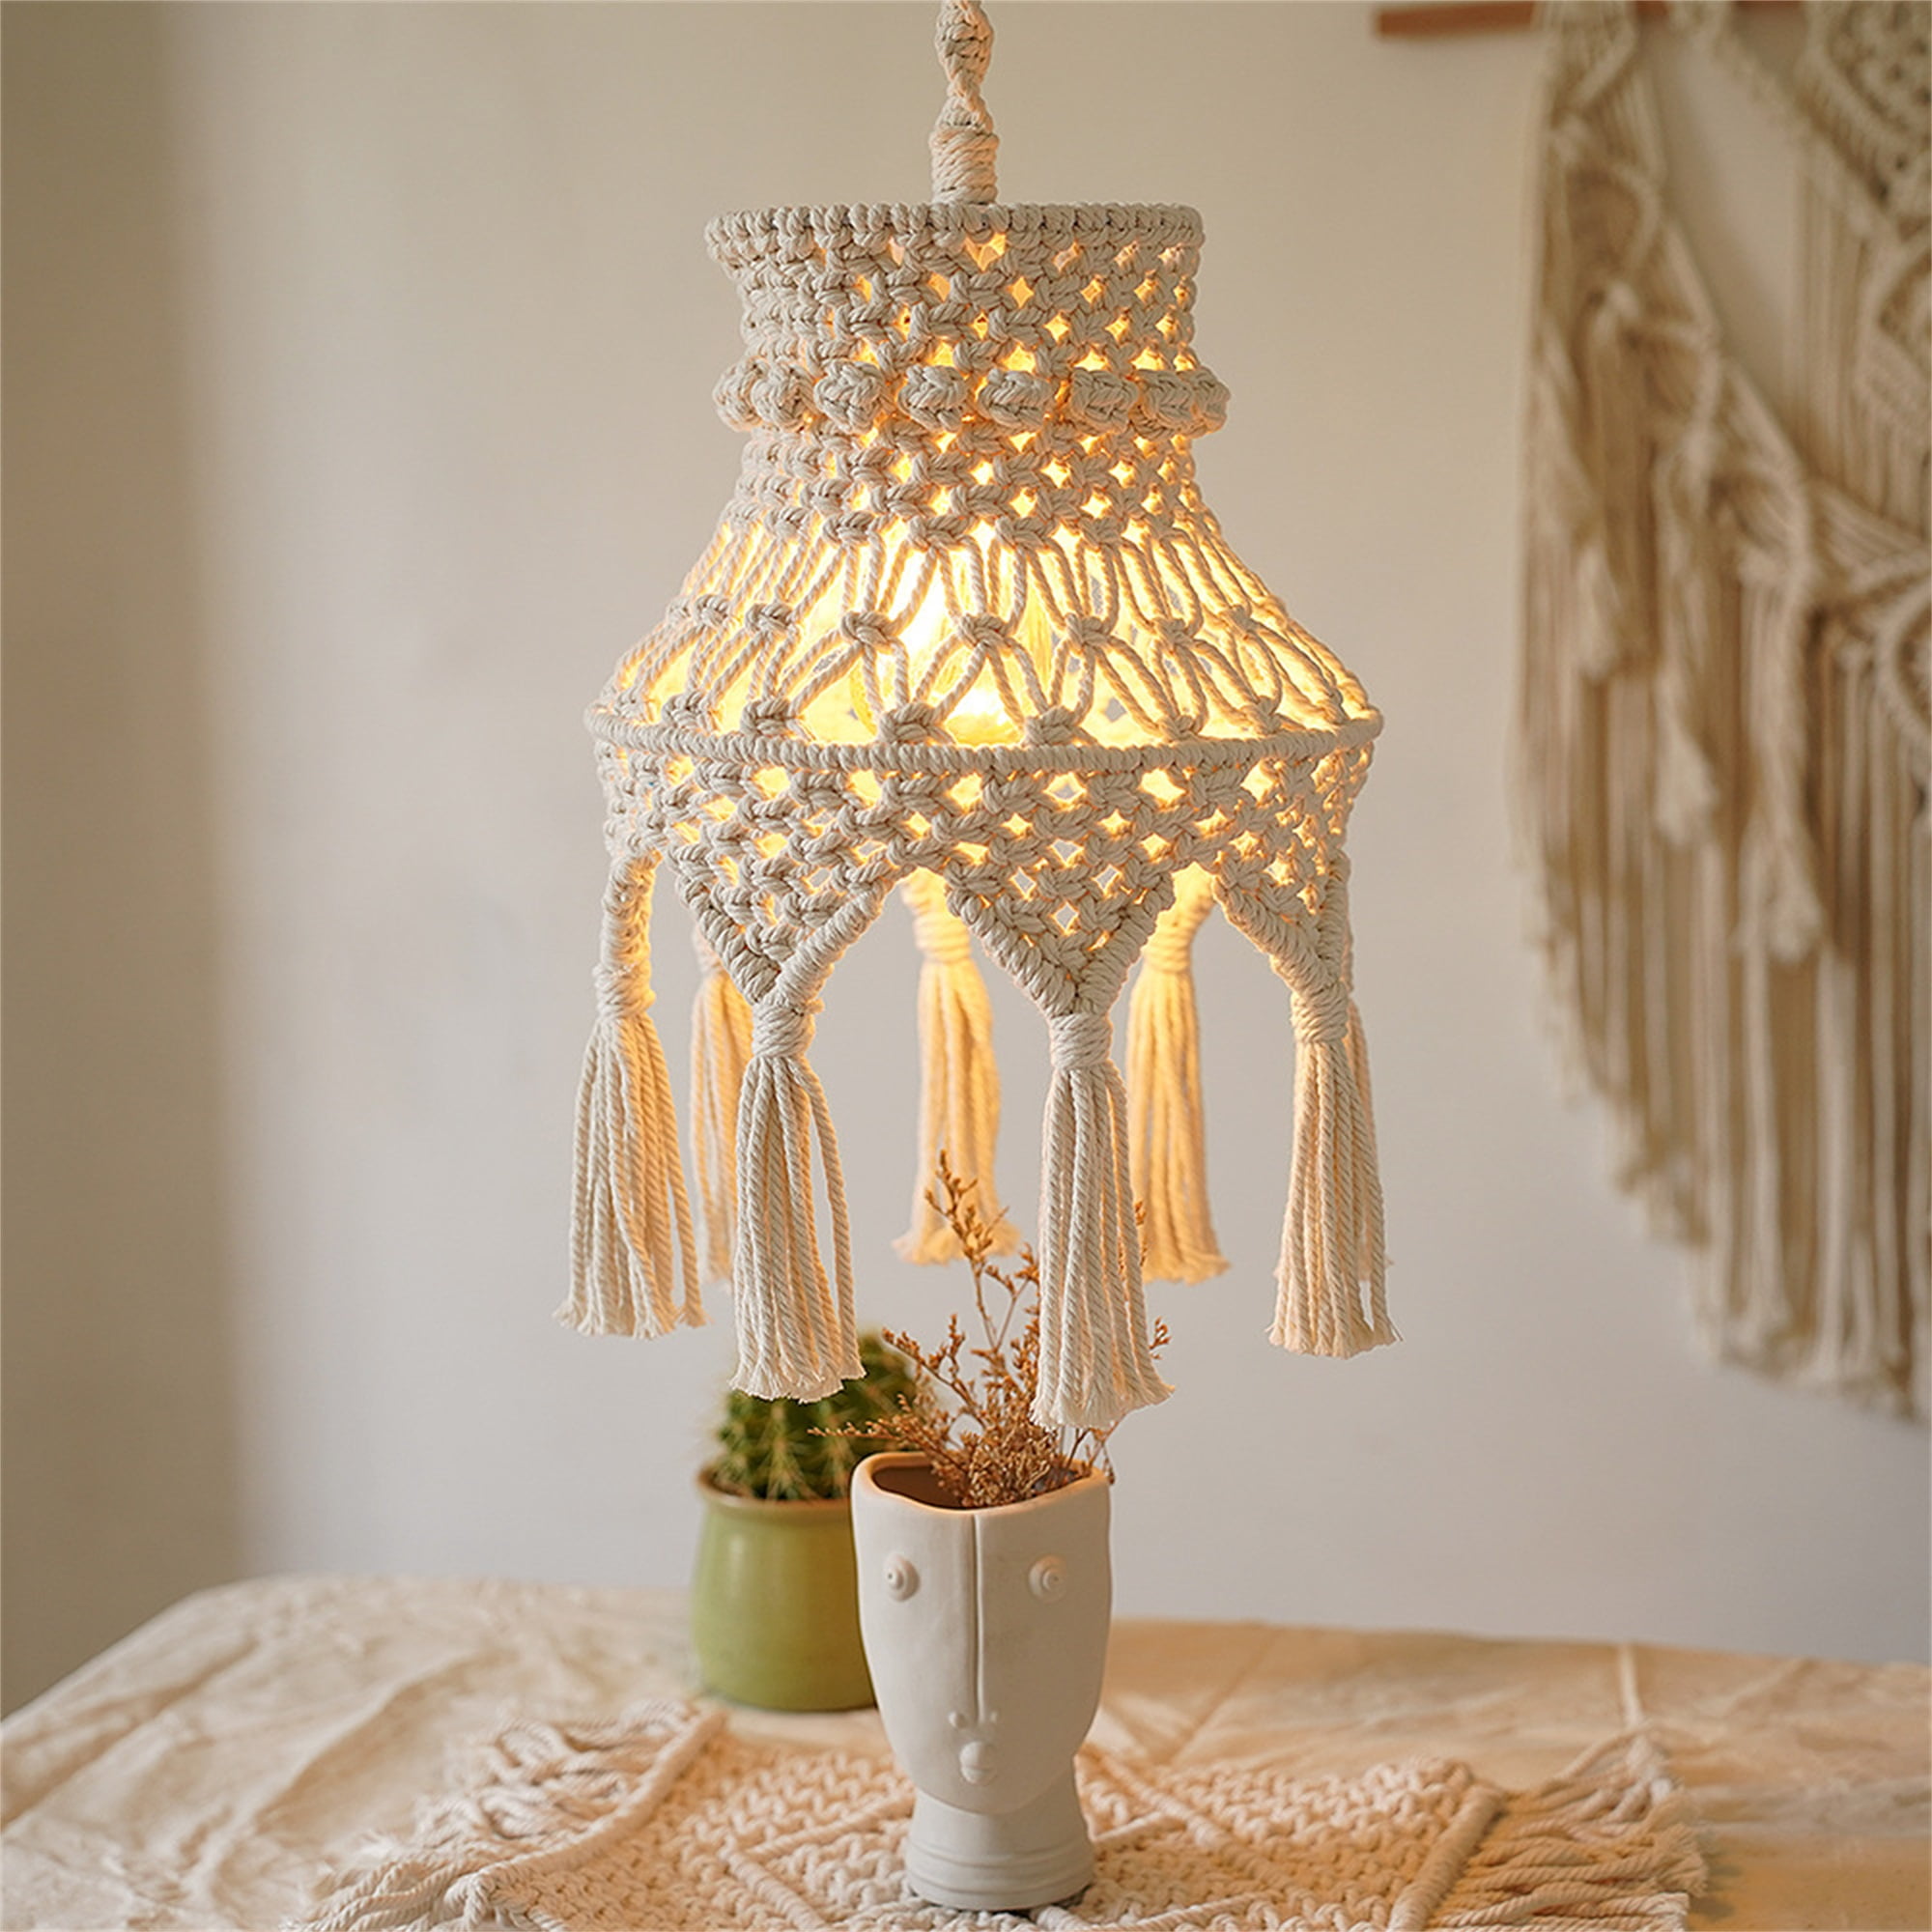 Macrame woven Lamp Shade Boho Hanging Lamp Shade Pendant Light ...